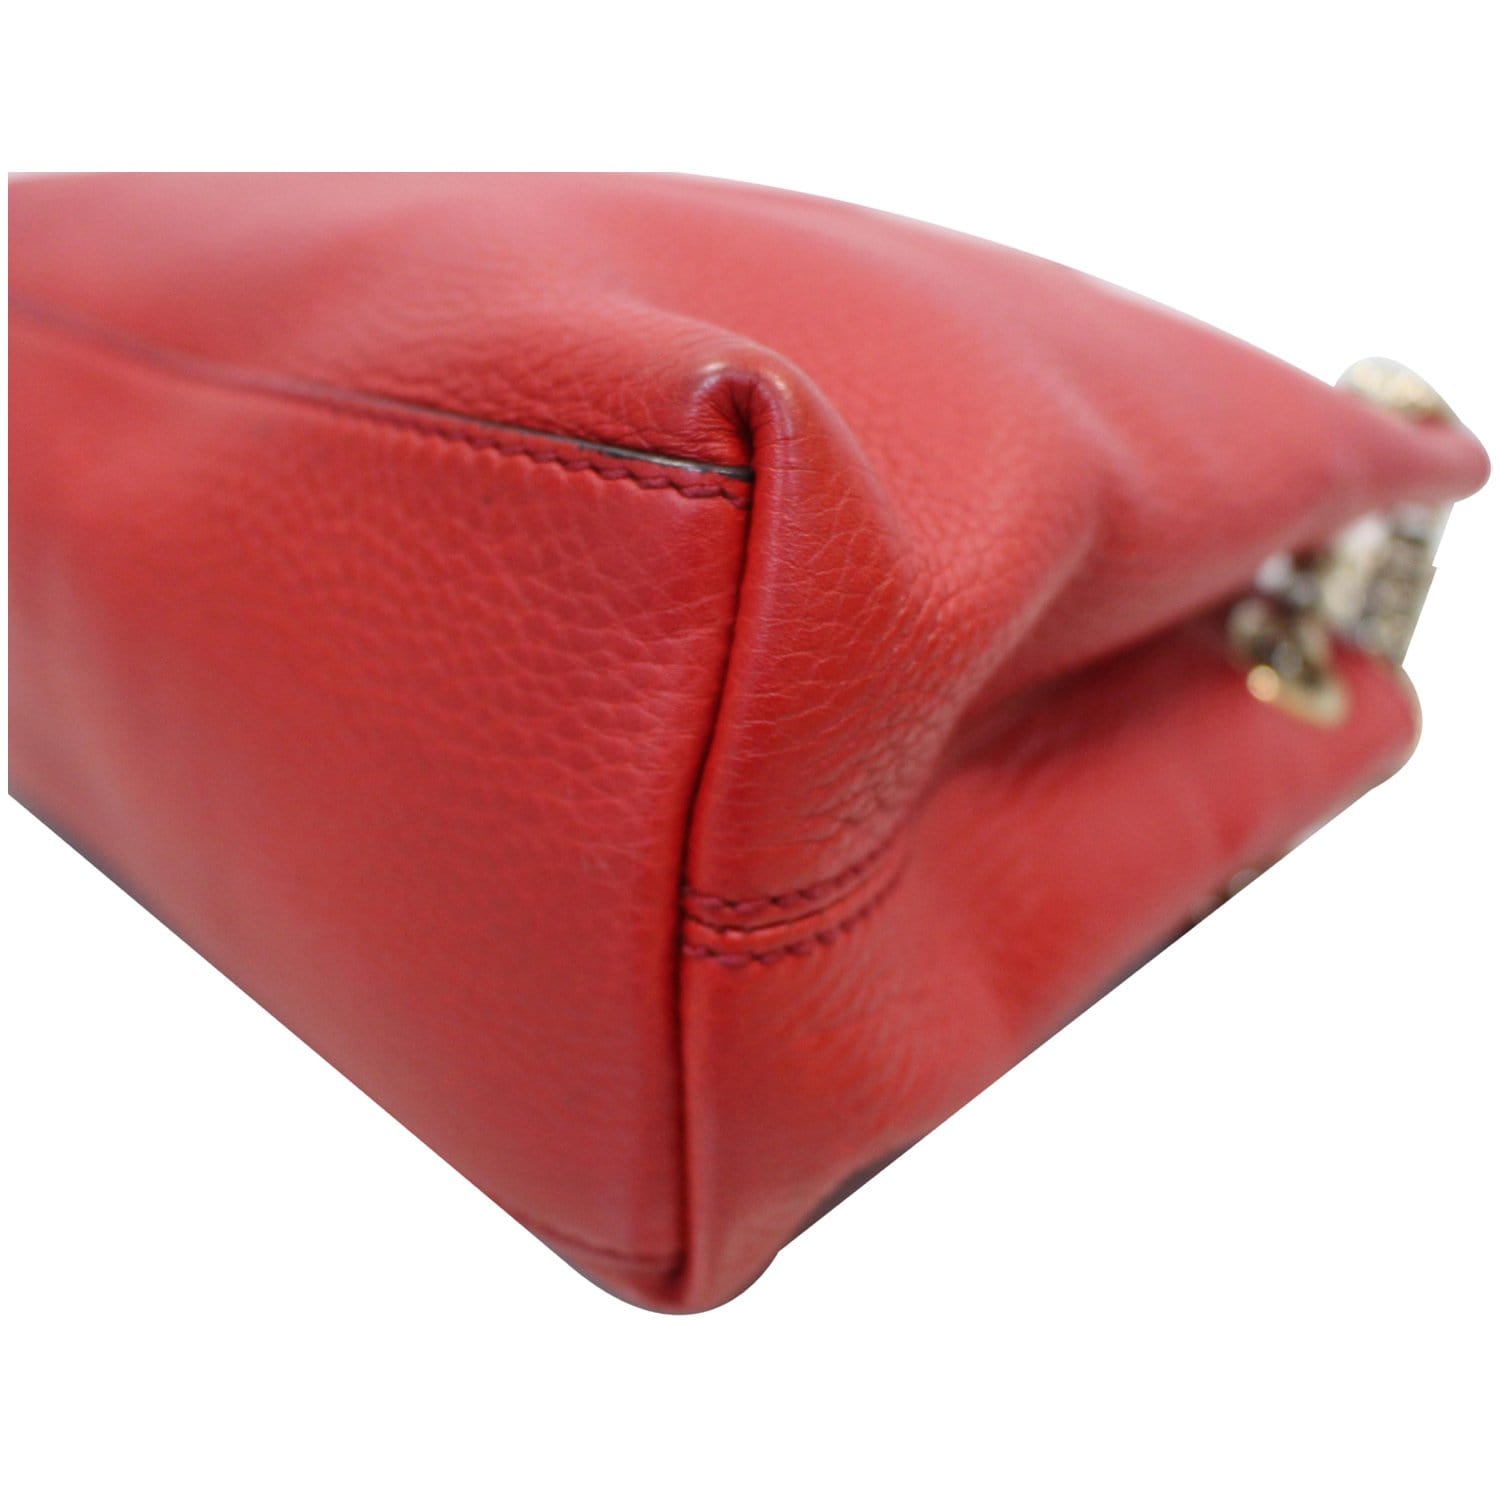 Gucci Soho Chain Mini Tassel Leather Shoulder Bag Red